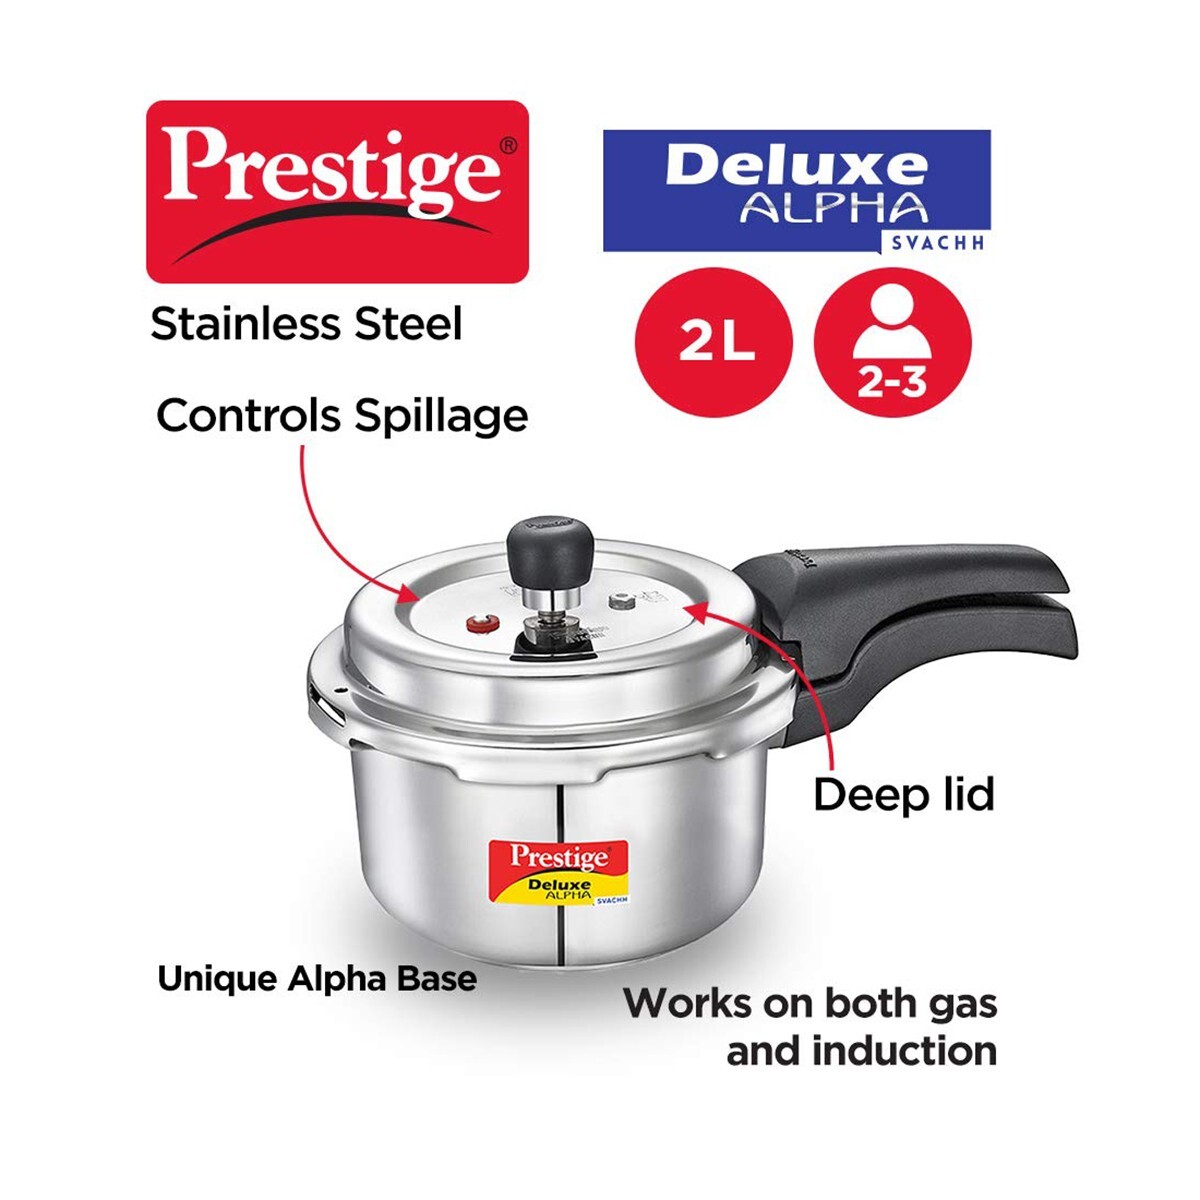 Prestige Stainless Steel Pressure Cooker Deluxe Alpha Svachh 2L